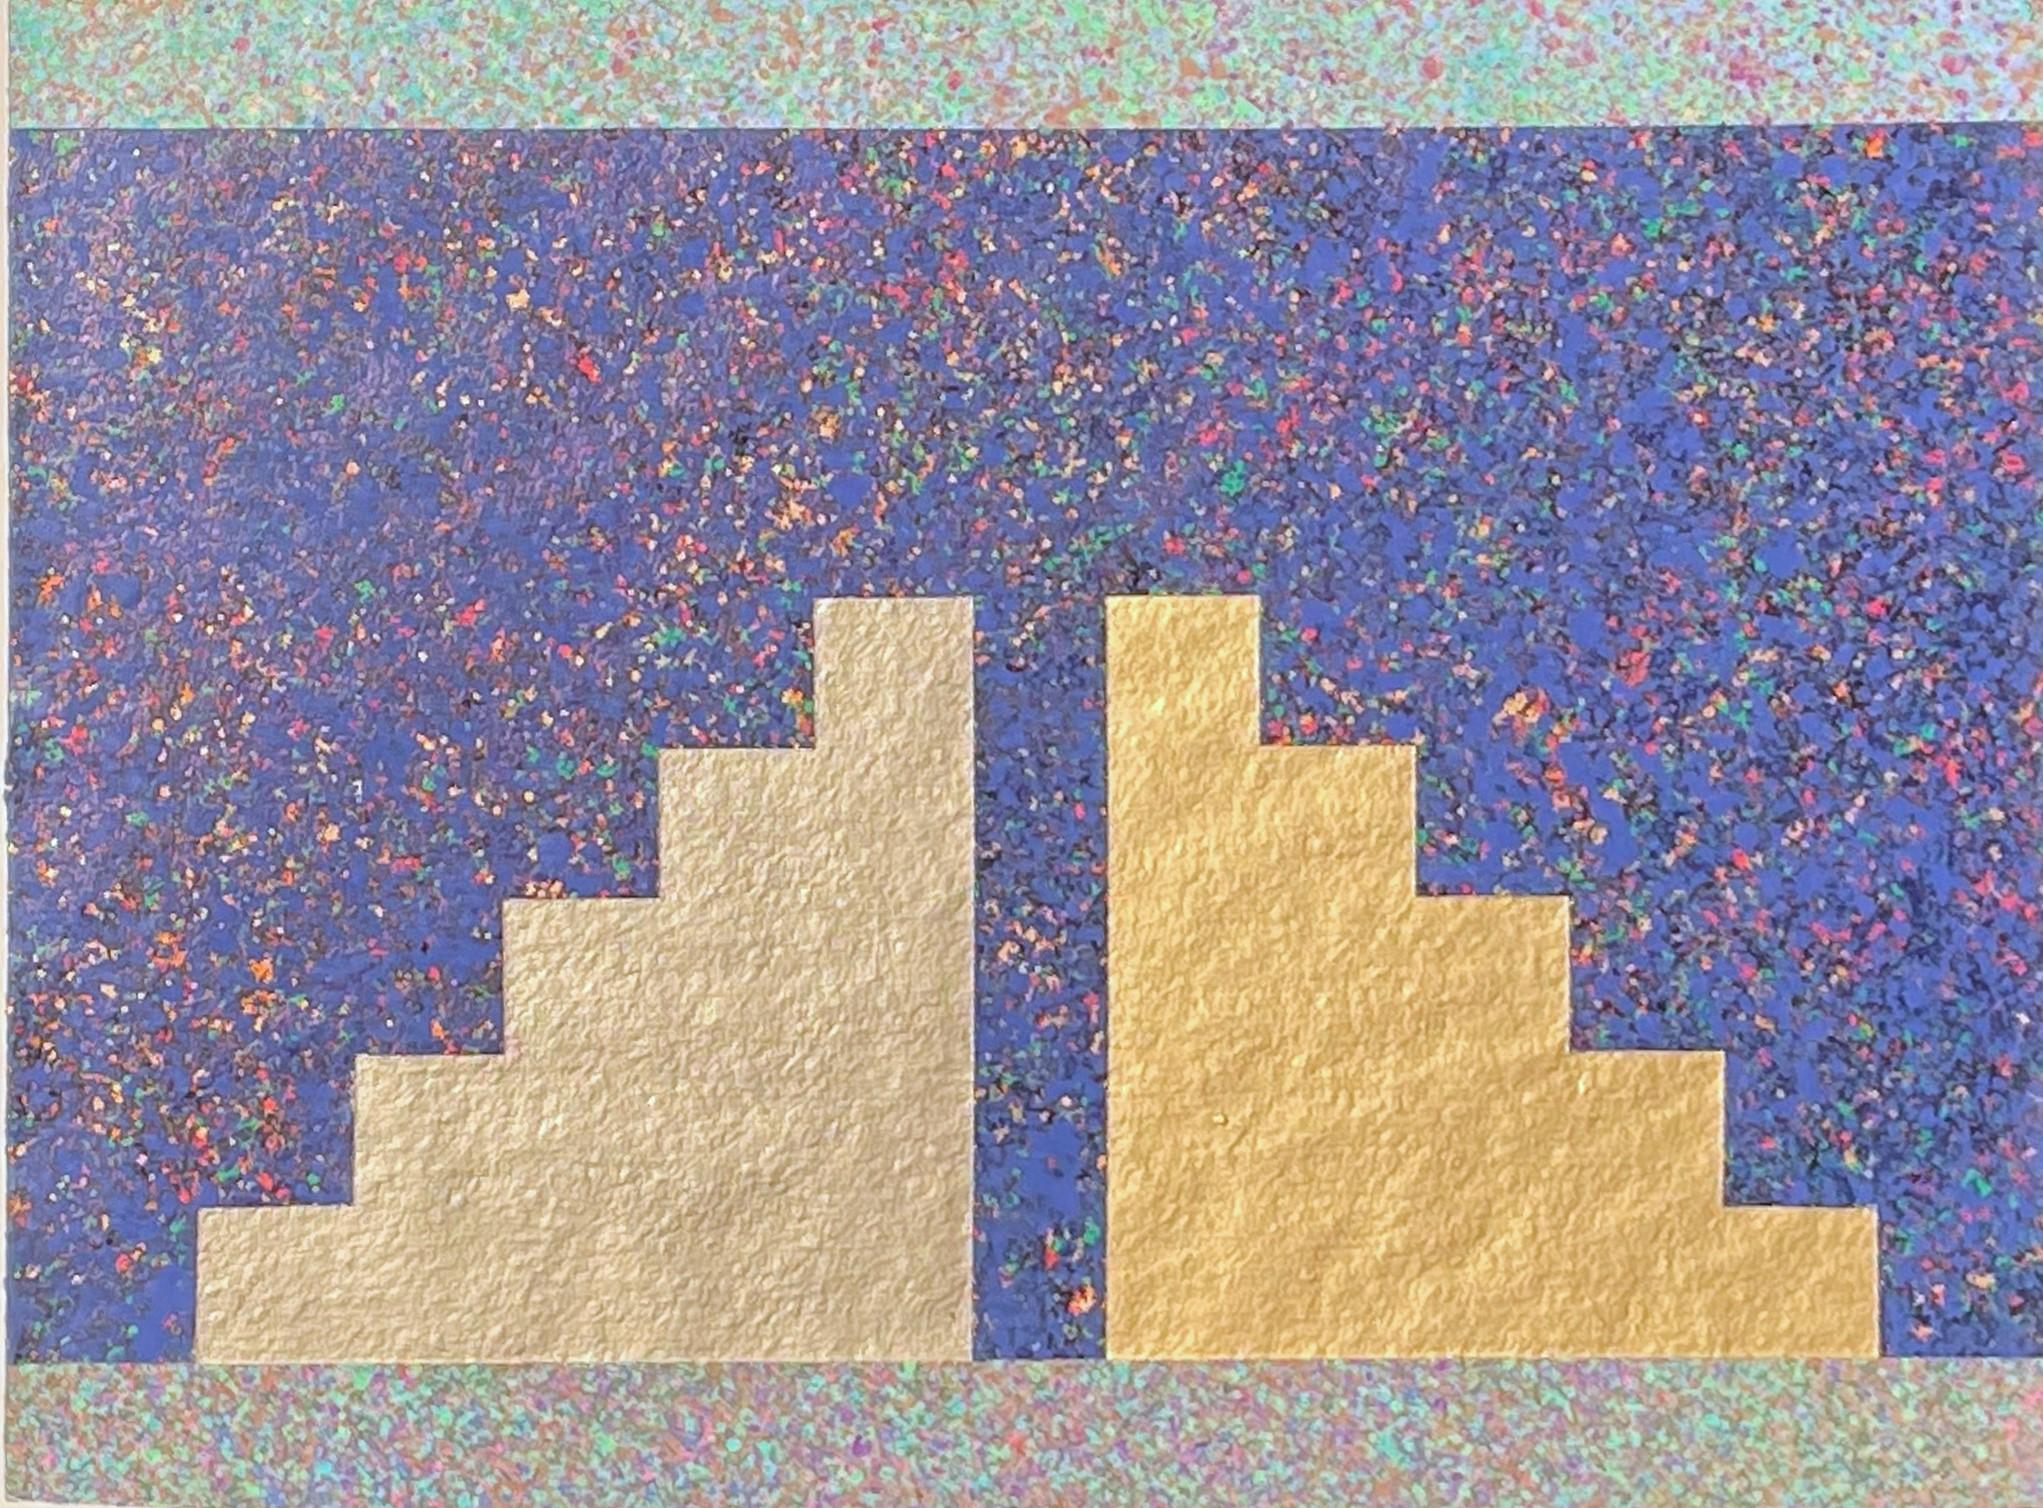 « Staircases Falling Out », Adrianne Wortzel, Op Art abstrait bleu et or